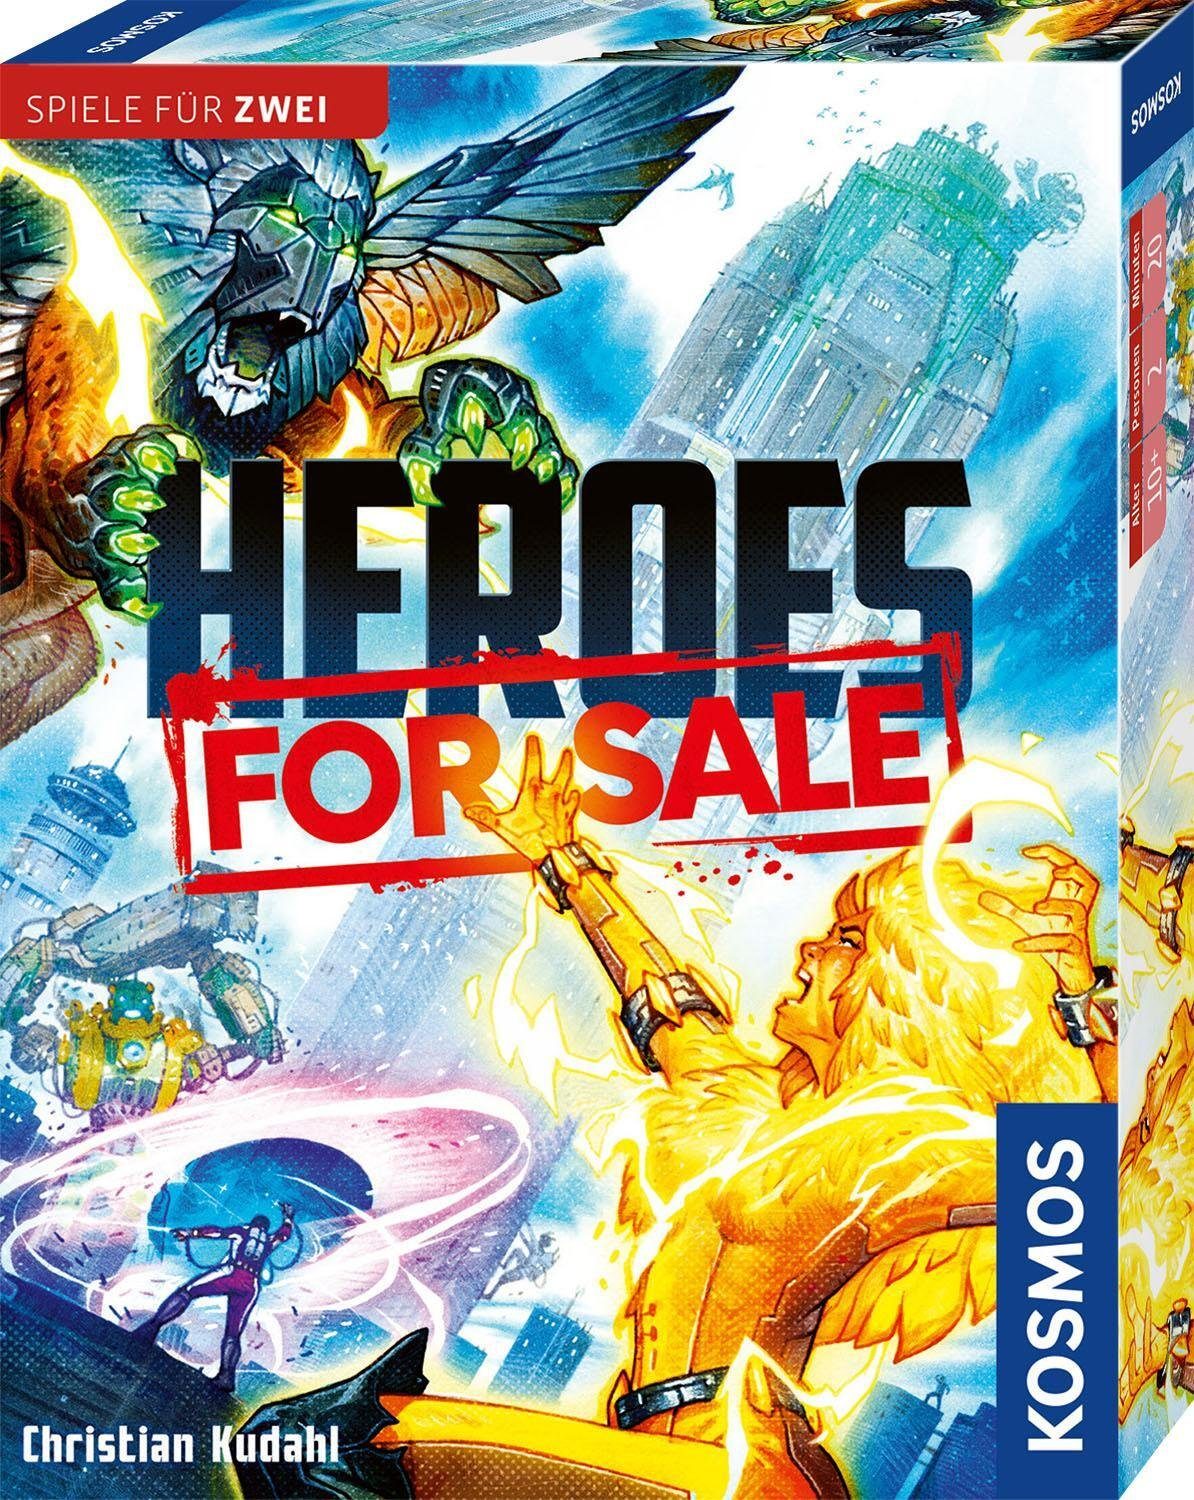 Kosmos Spiel, Heroes for sale